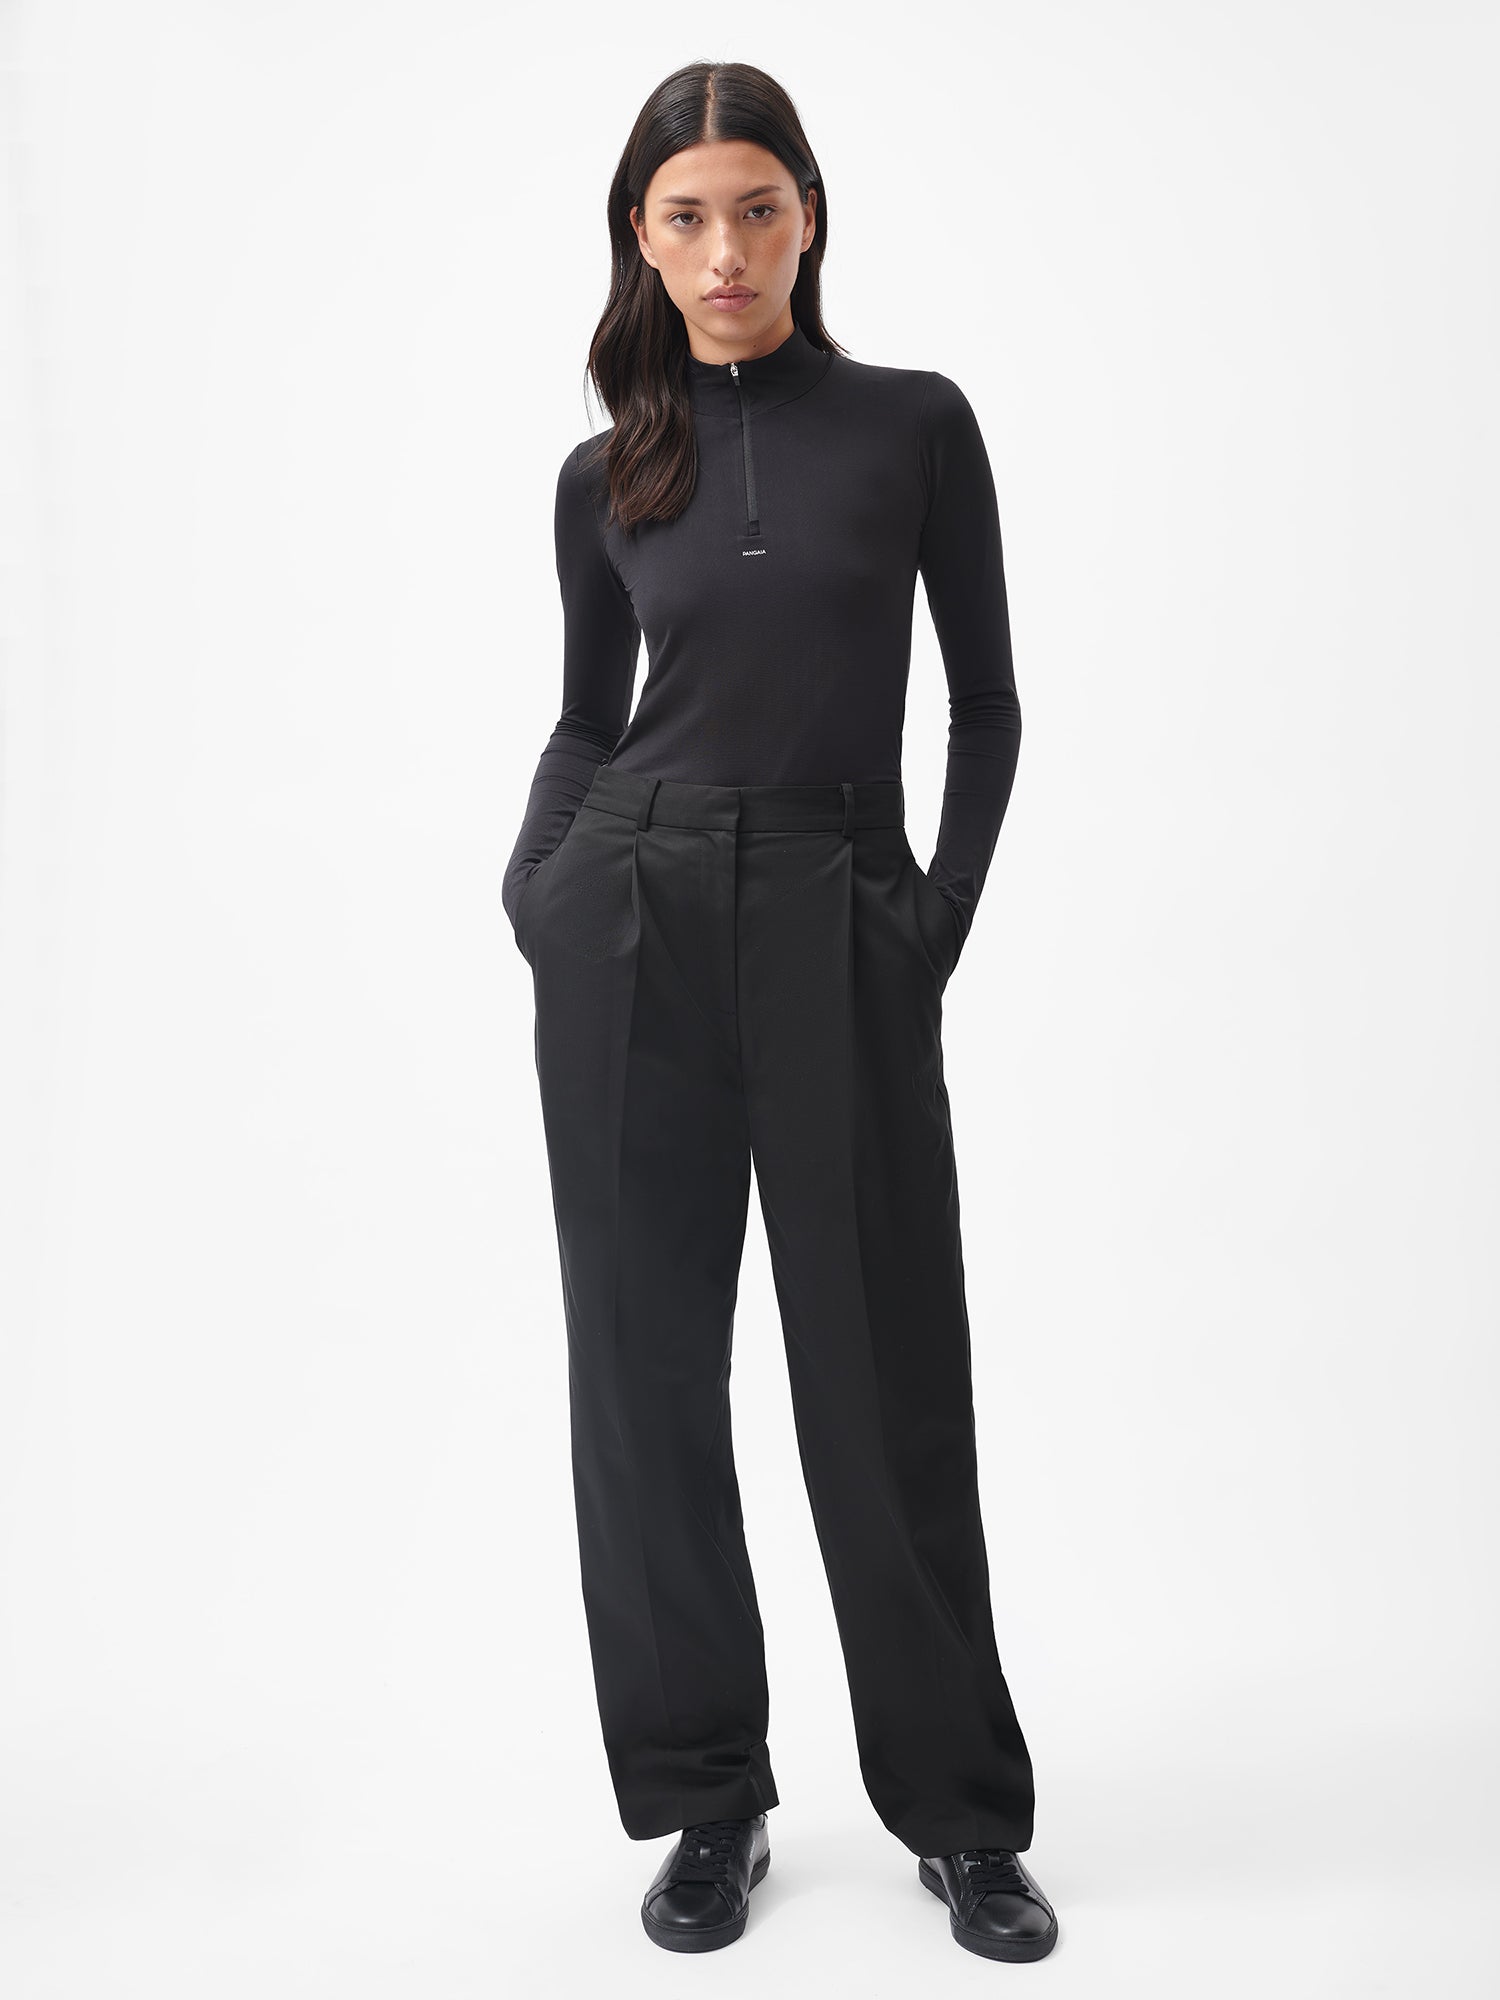 Black Trousers for Women  Female Black Beauty Work Formal Pants –  Uniforms4Healthcare